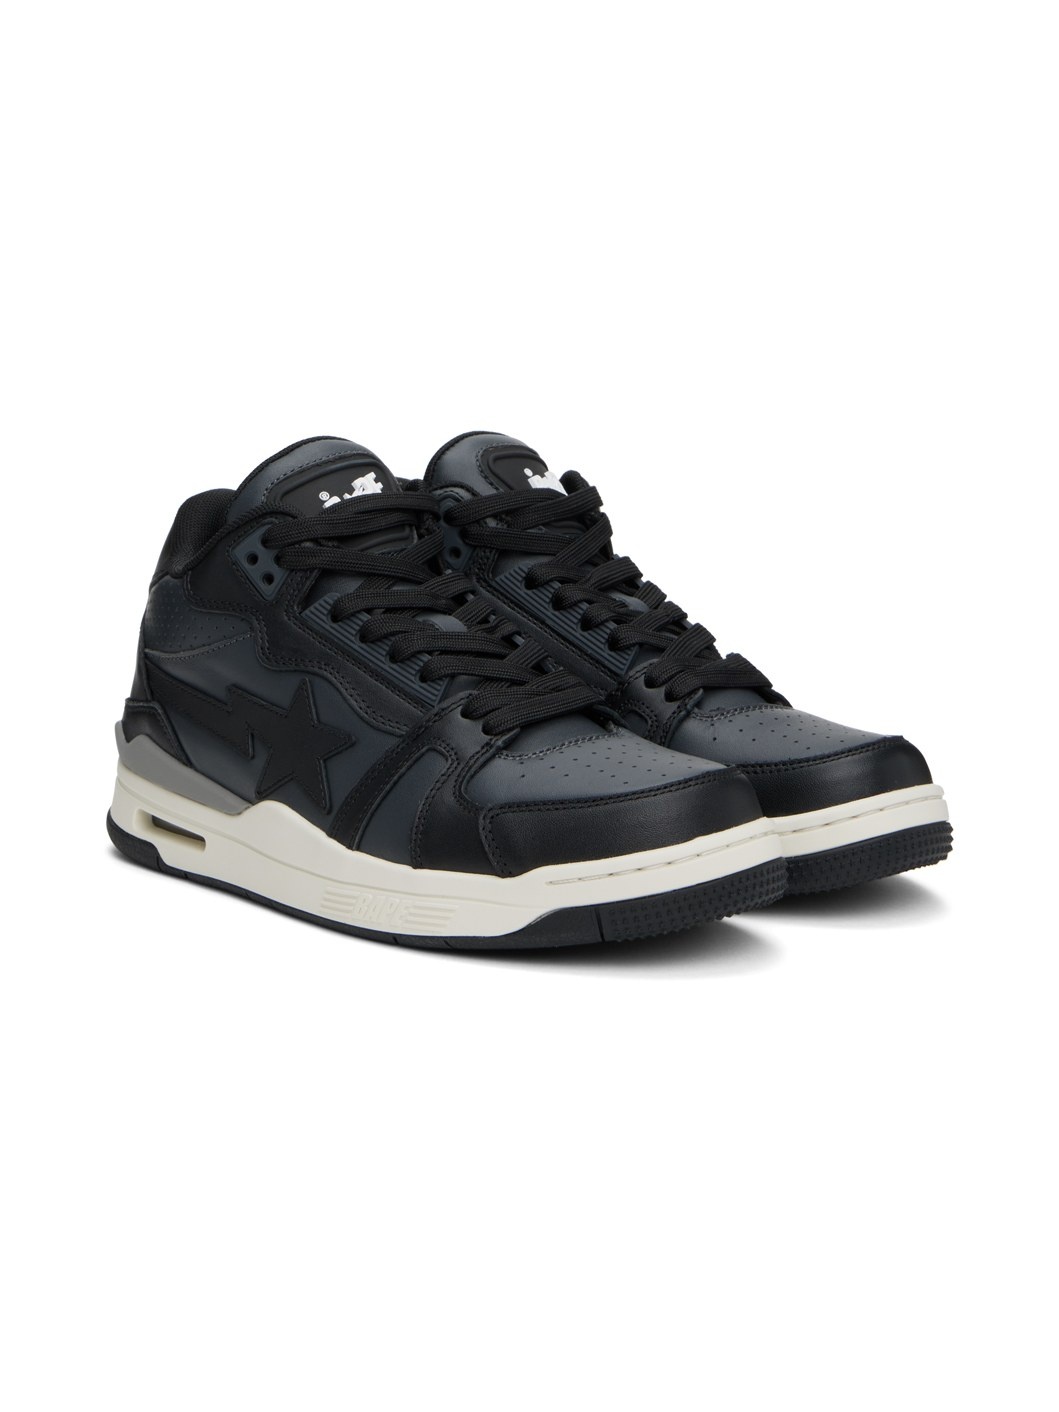 Black & Gray Clutch Sta #1 Sneakers - 4